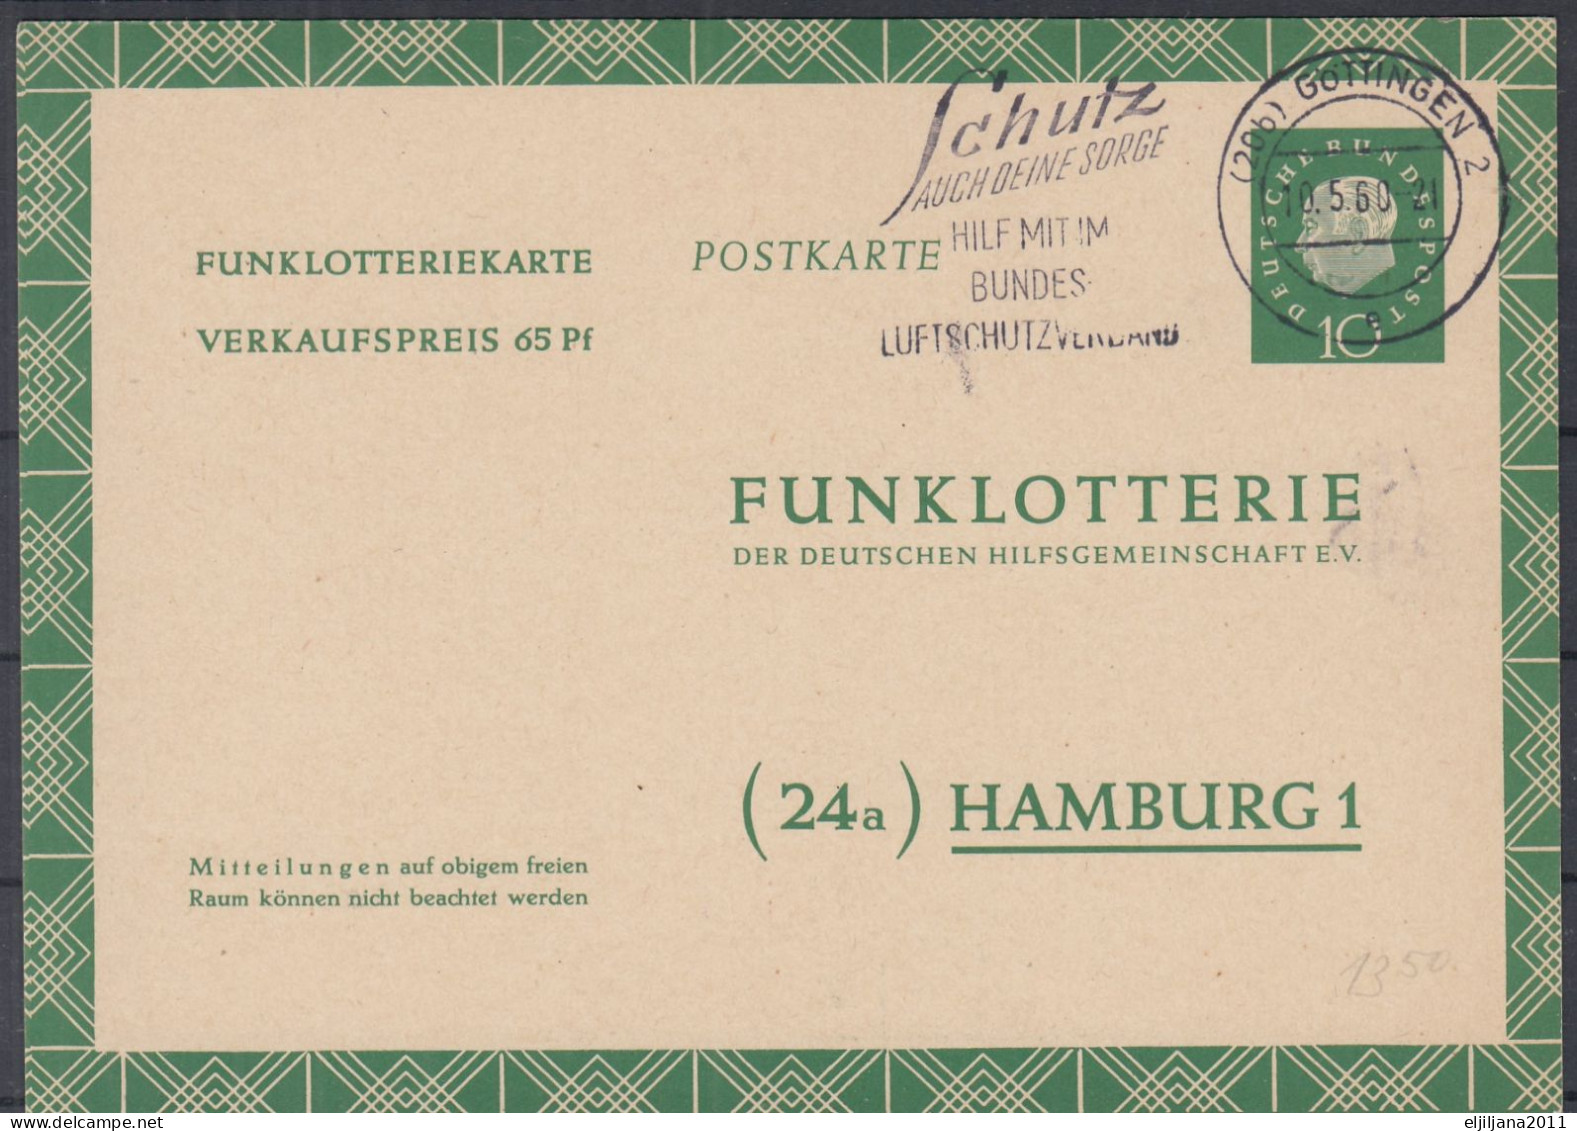 ⁕ Germany 1960 Deutsche BundesPost ⁕ FUNKLOTTERIE (24a) Hamburg 1 ⁕ Göttingen Postmark ⁕ Stationery Postcard - Cartes Postales - Oblitérées